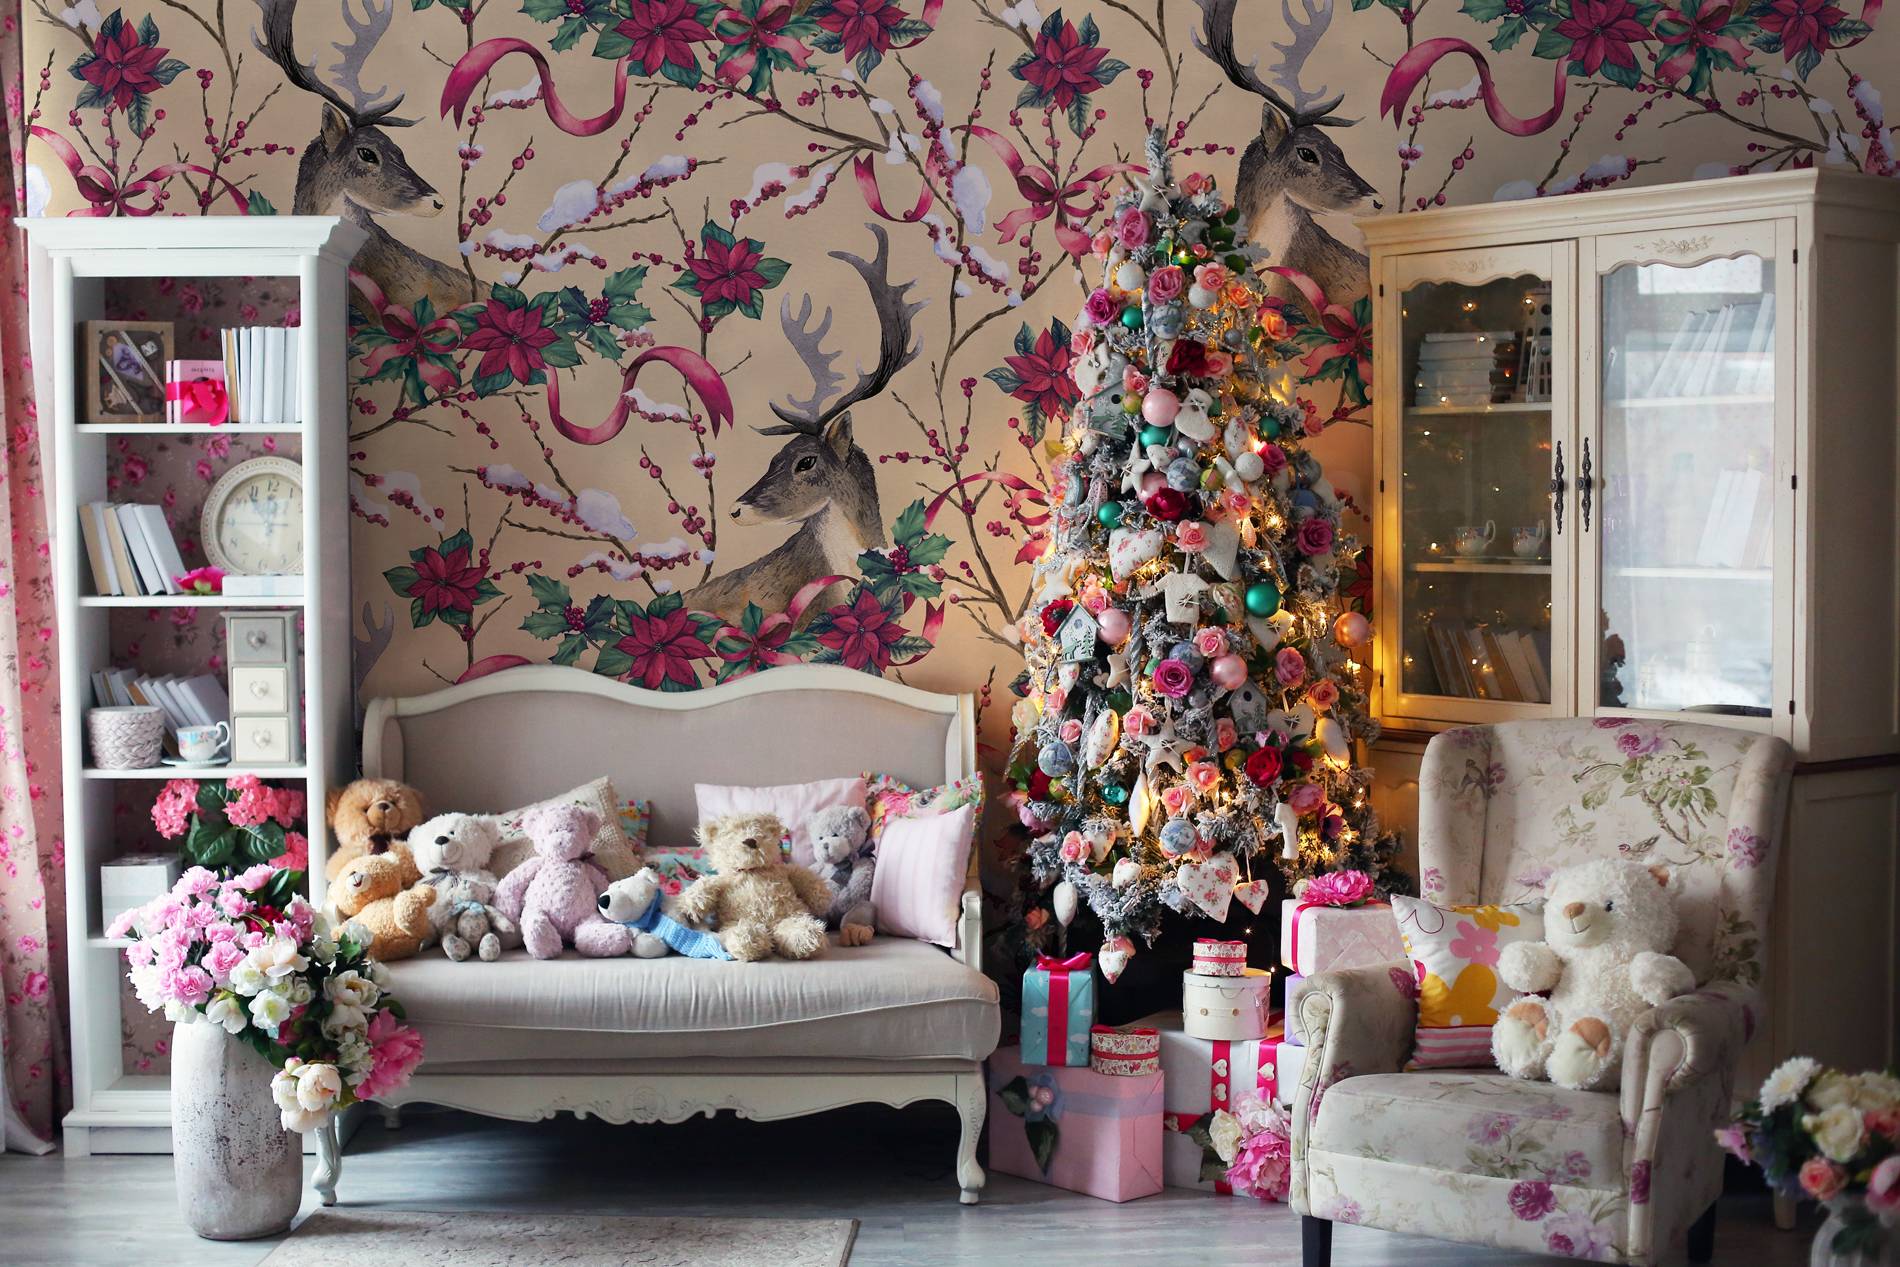 Christmas deer • Kids room - Shabby Chic - Nature - Wall Murals